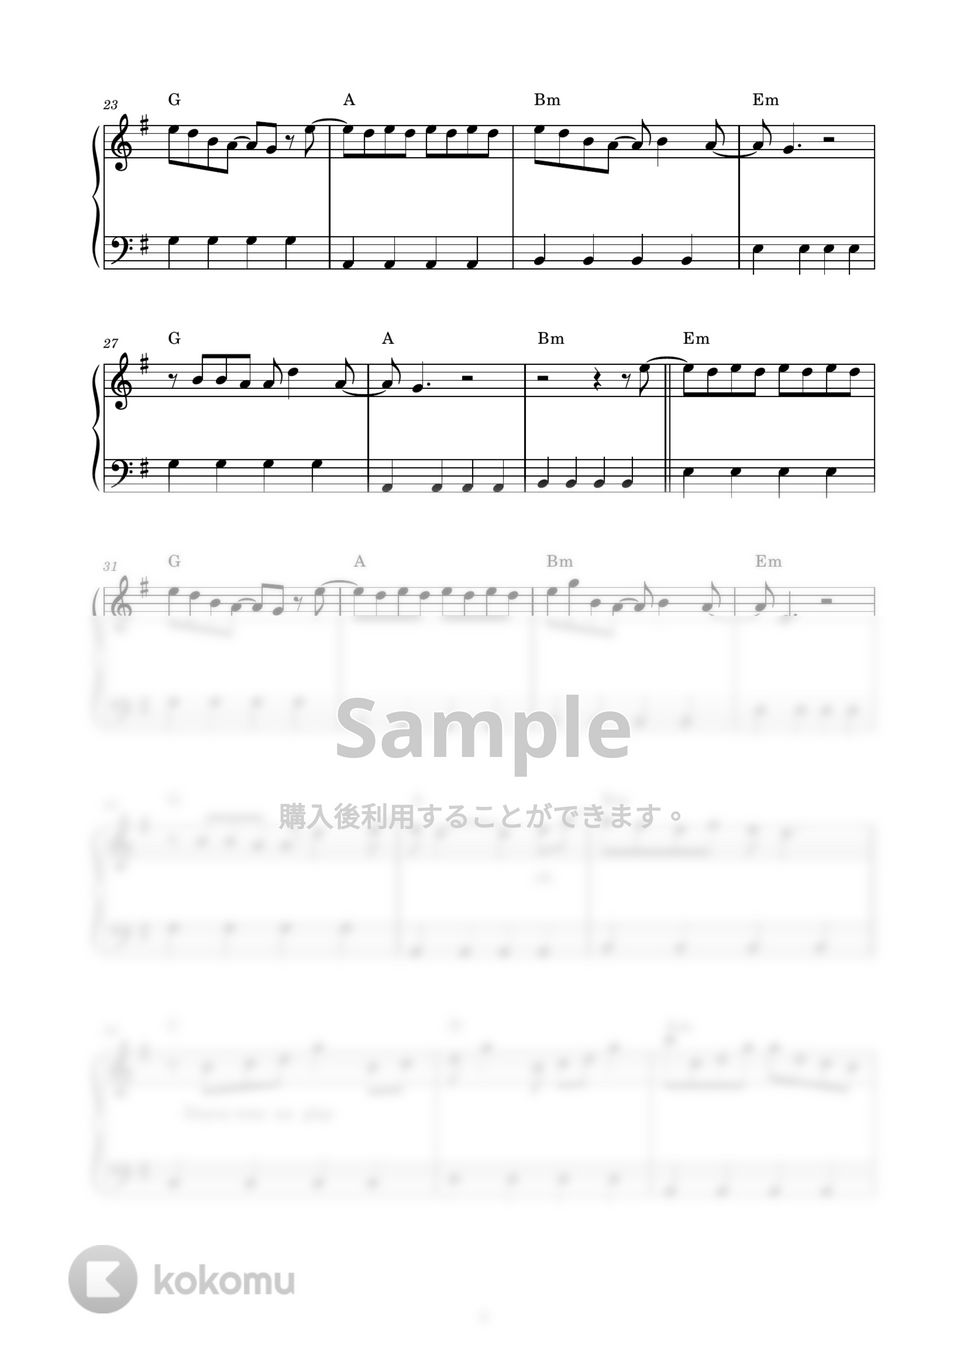 Ado - 新時代 (ウタ from ONE PIECE FILM RED) (ピアノ楽譜 / かんたん両手 / 歌詞付き / ドレミ付き / 初心者向き) by piano.tokyo